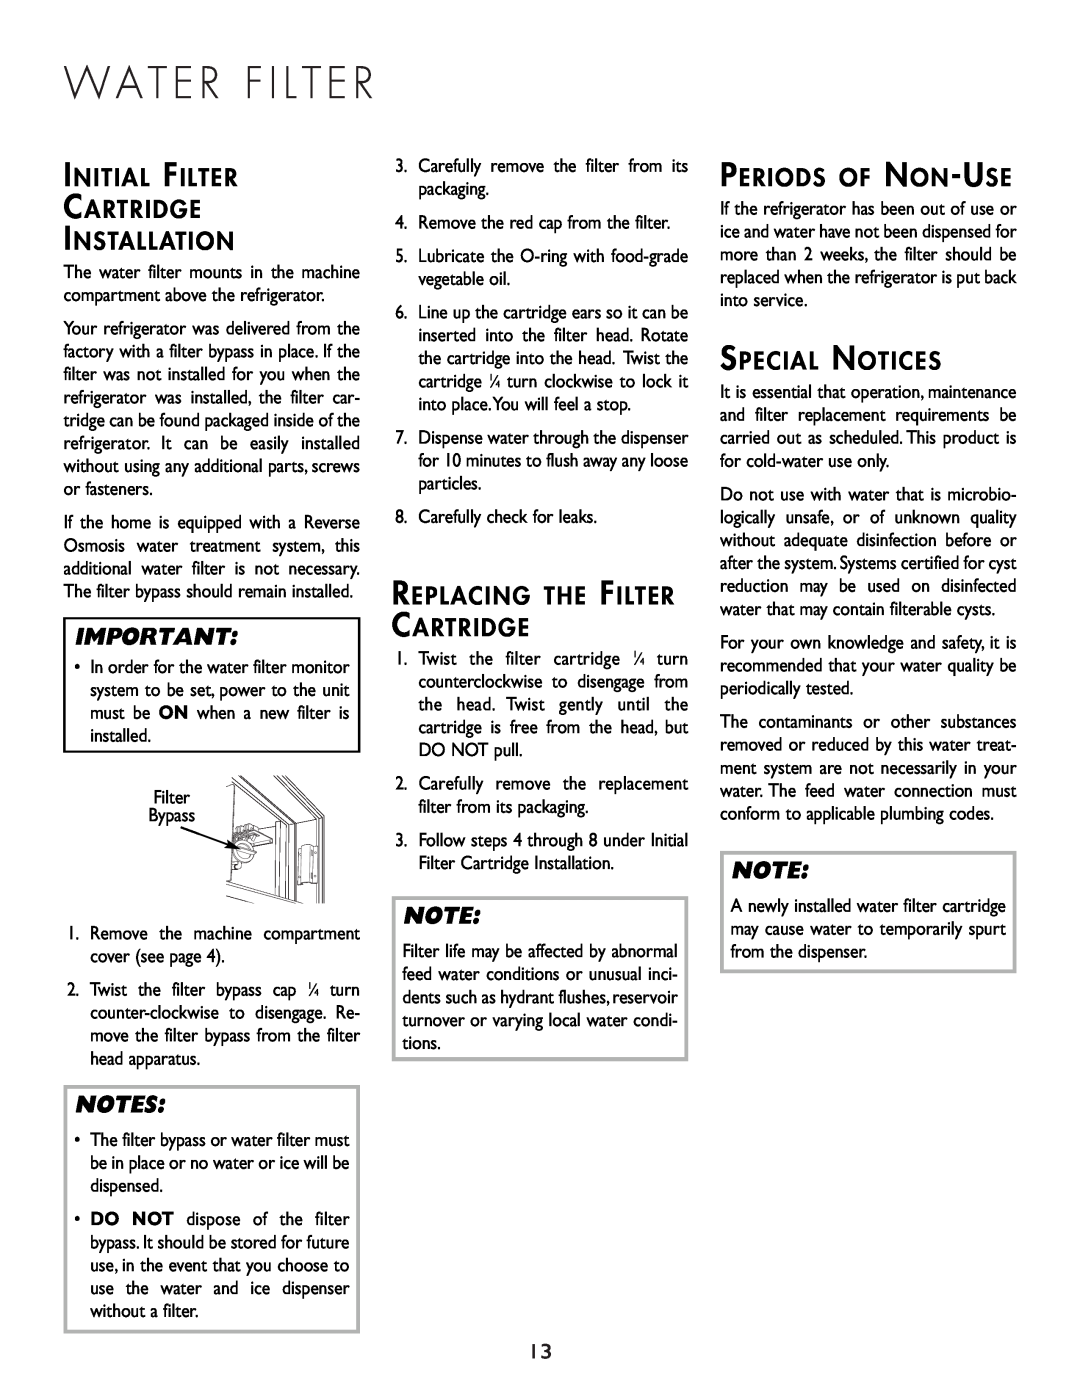 Cuno 111405-1 manual W A T E R F I L T E R, Initial Filter Cartridge Installation, Replacing The Filter Cartridge, Notes 